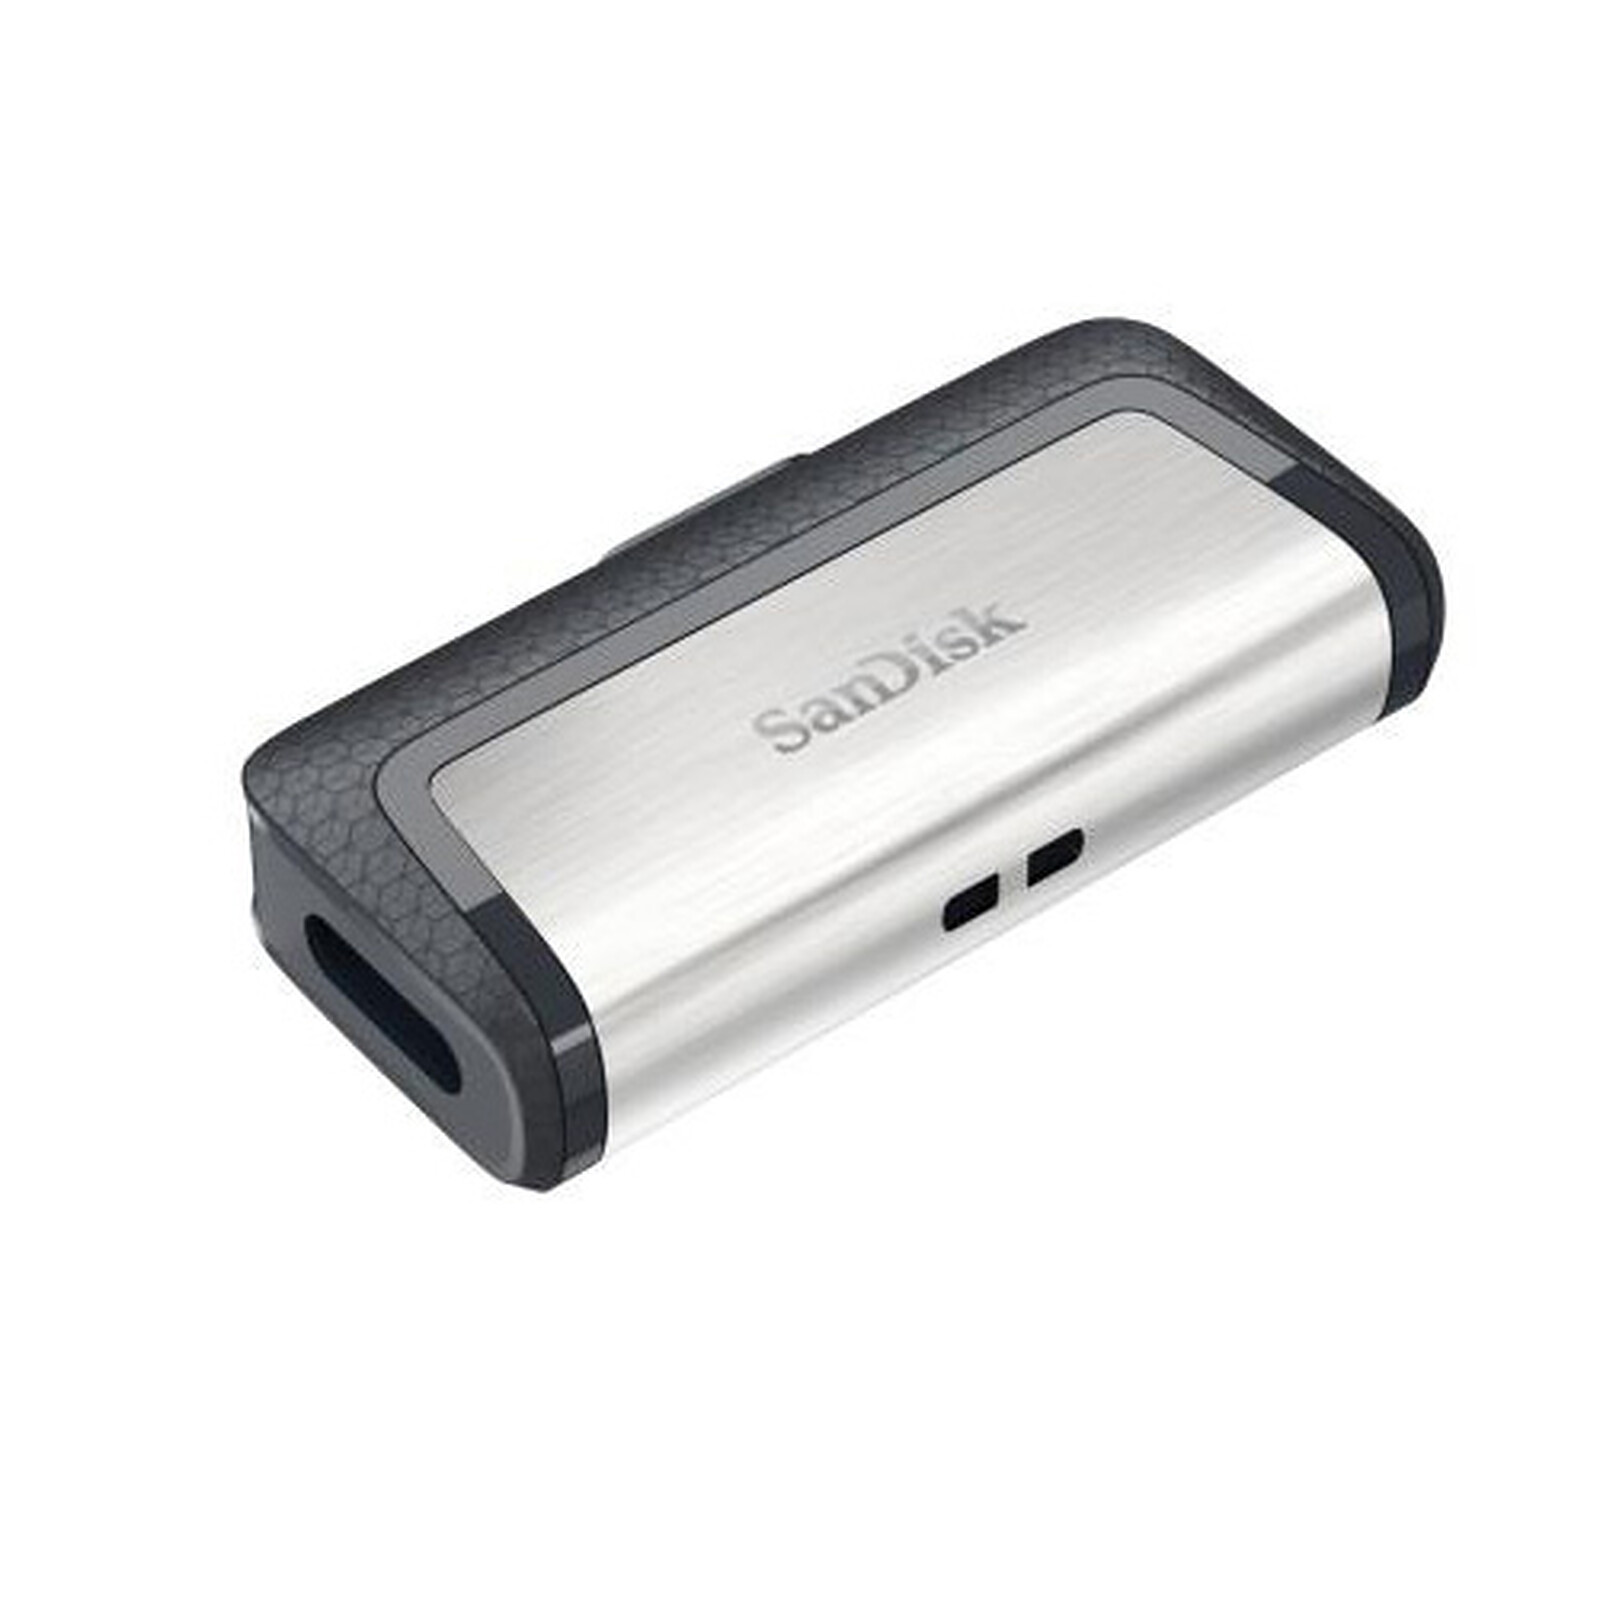 SanDisk - Clé USB 3.1 - Ultra Fit (16/32 Go)